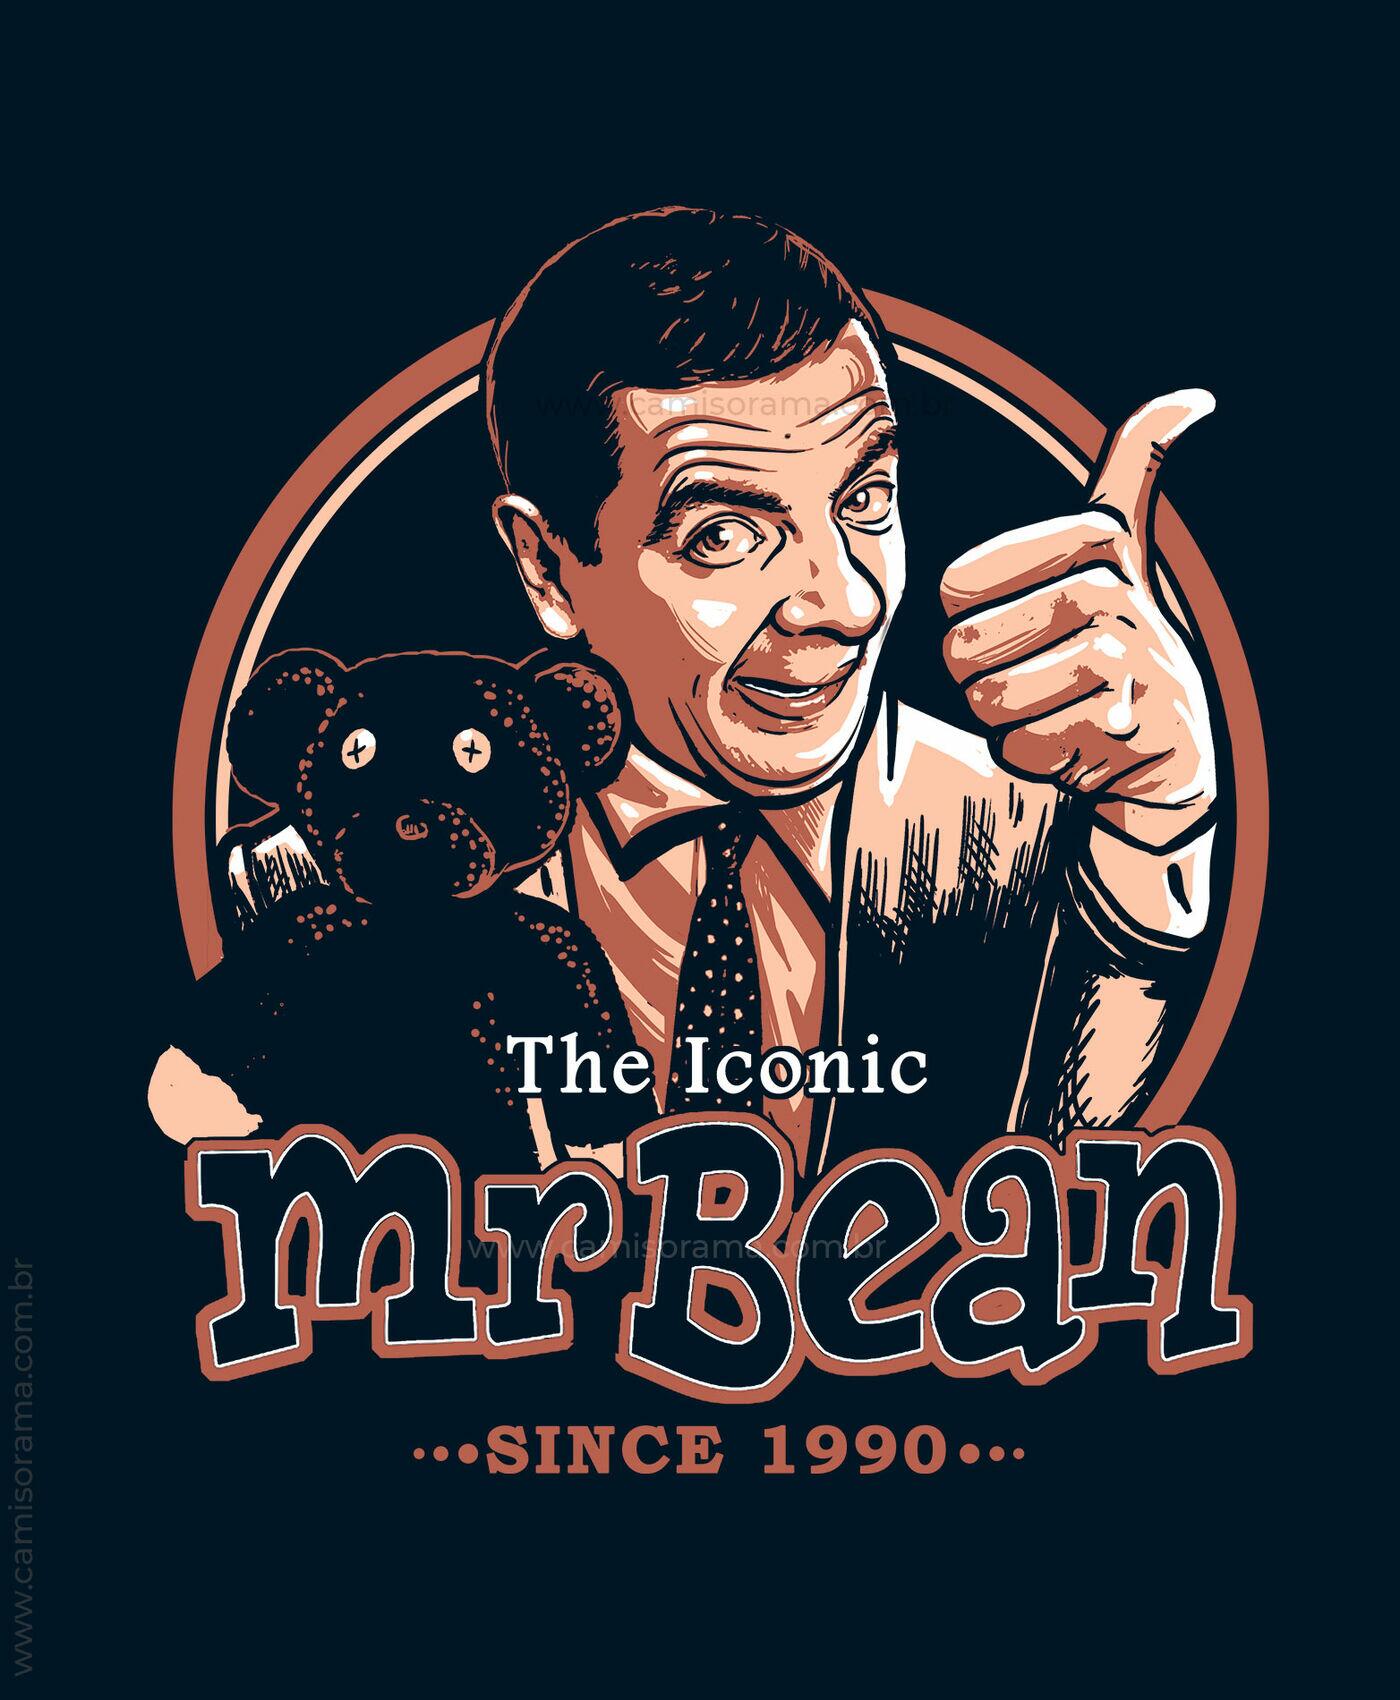 Camiseta Mr. Bean  Elo7 Produtos Especiais